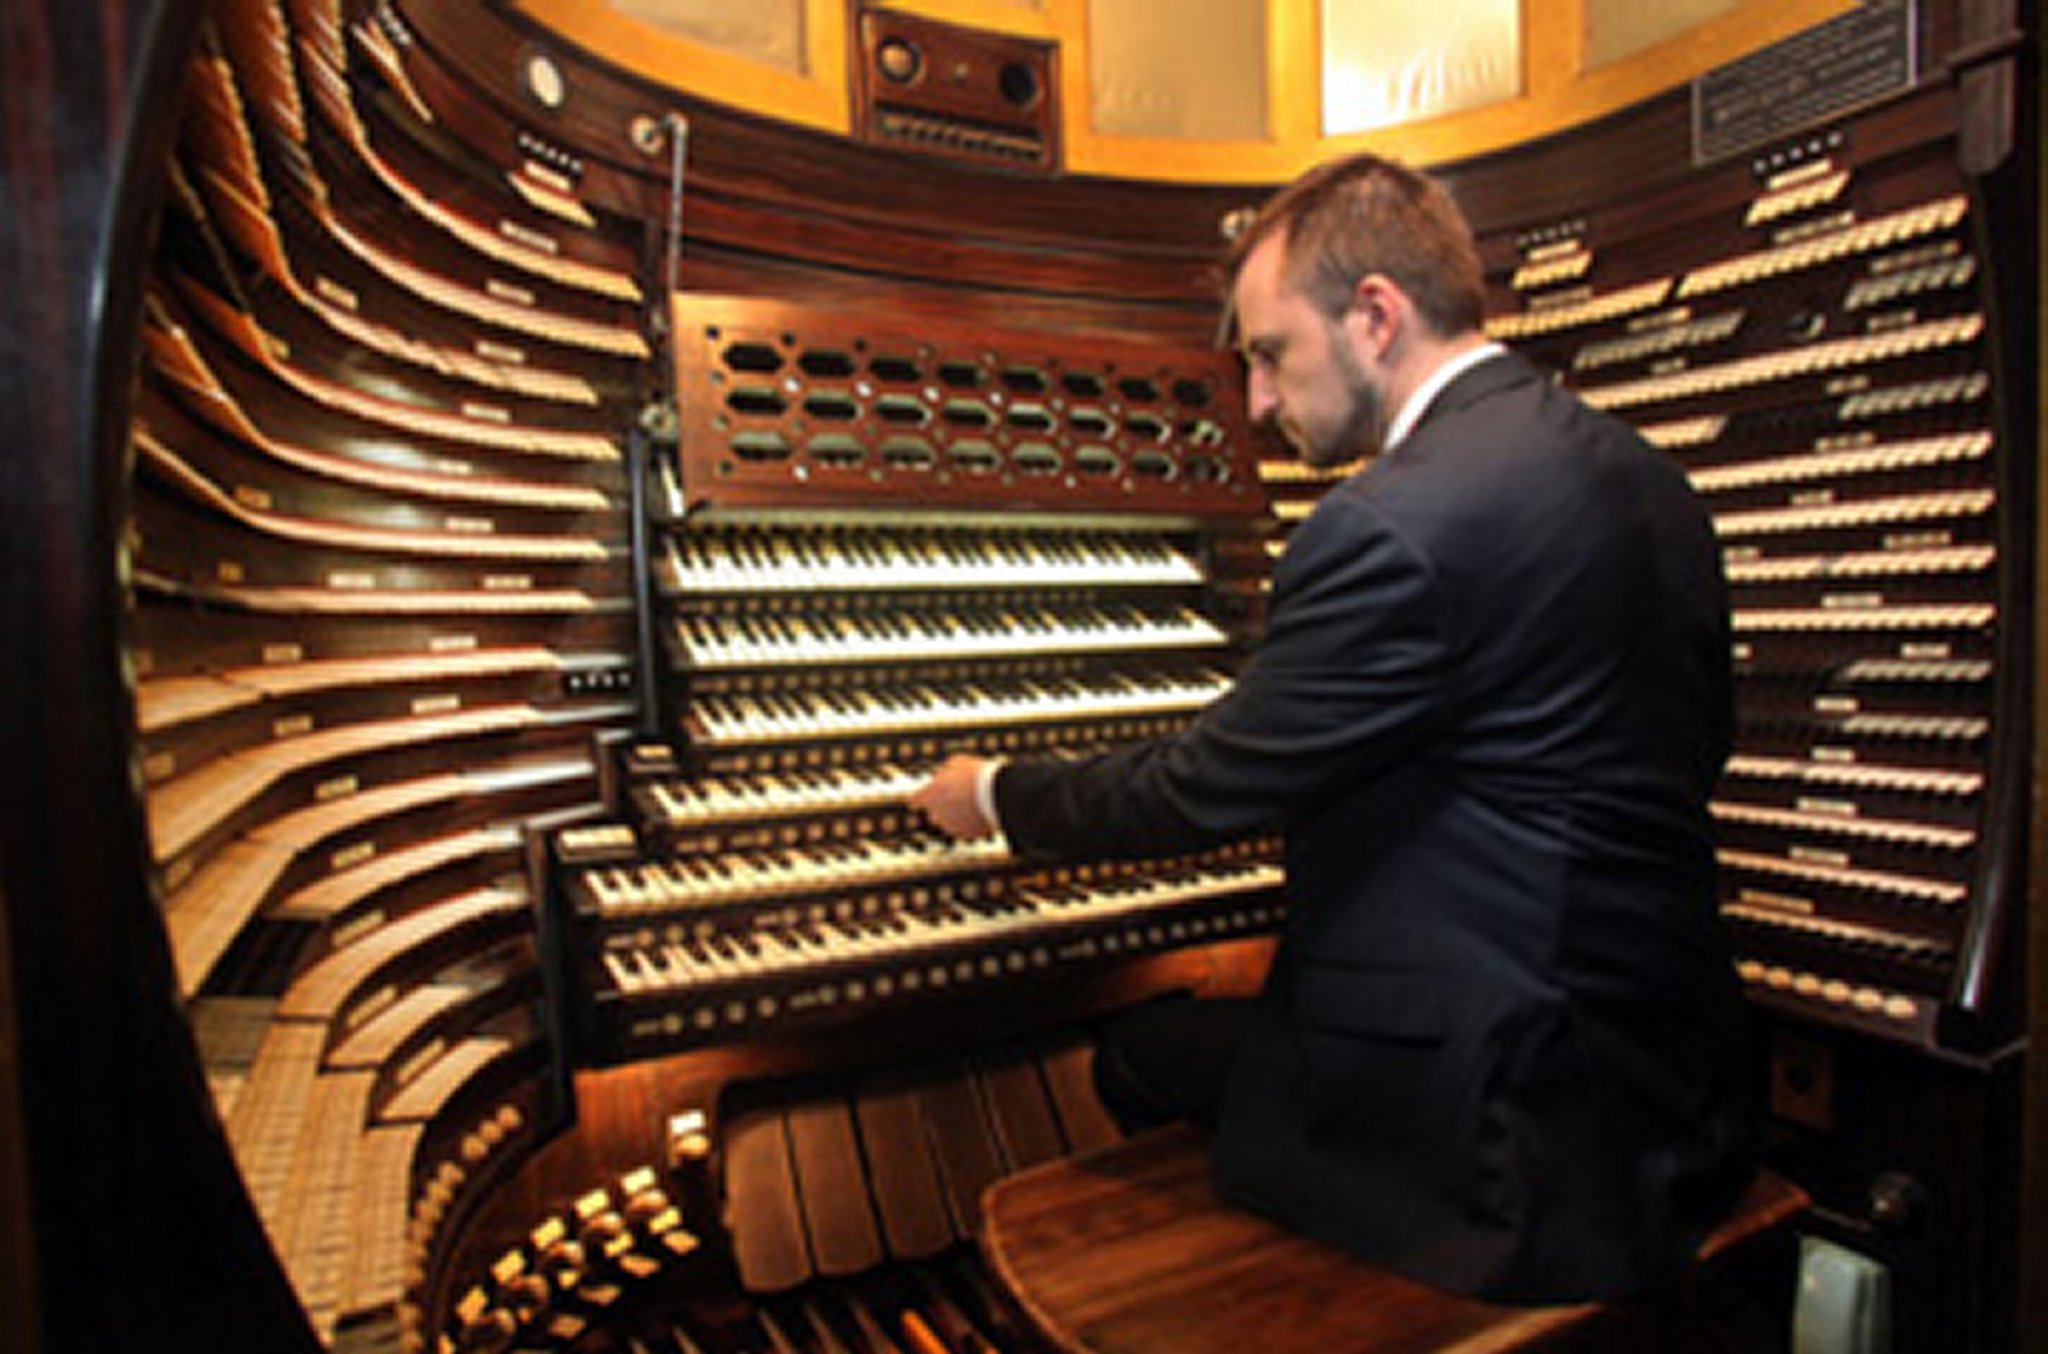 1932 Midmer-Losh Organ